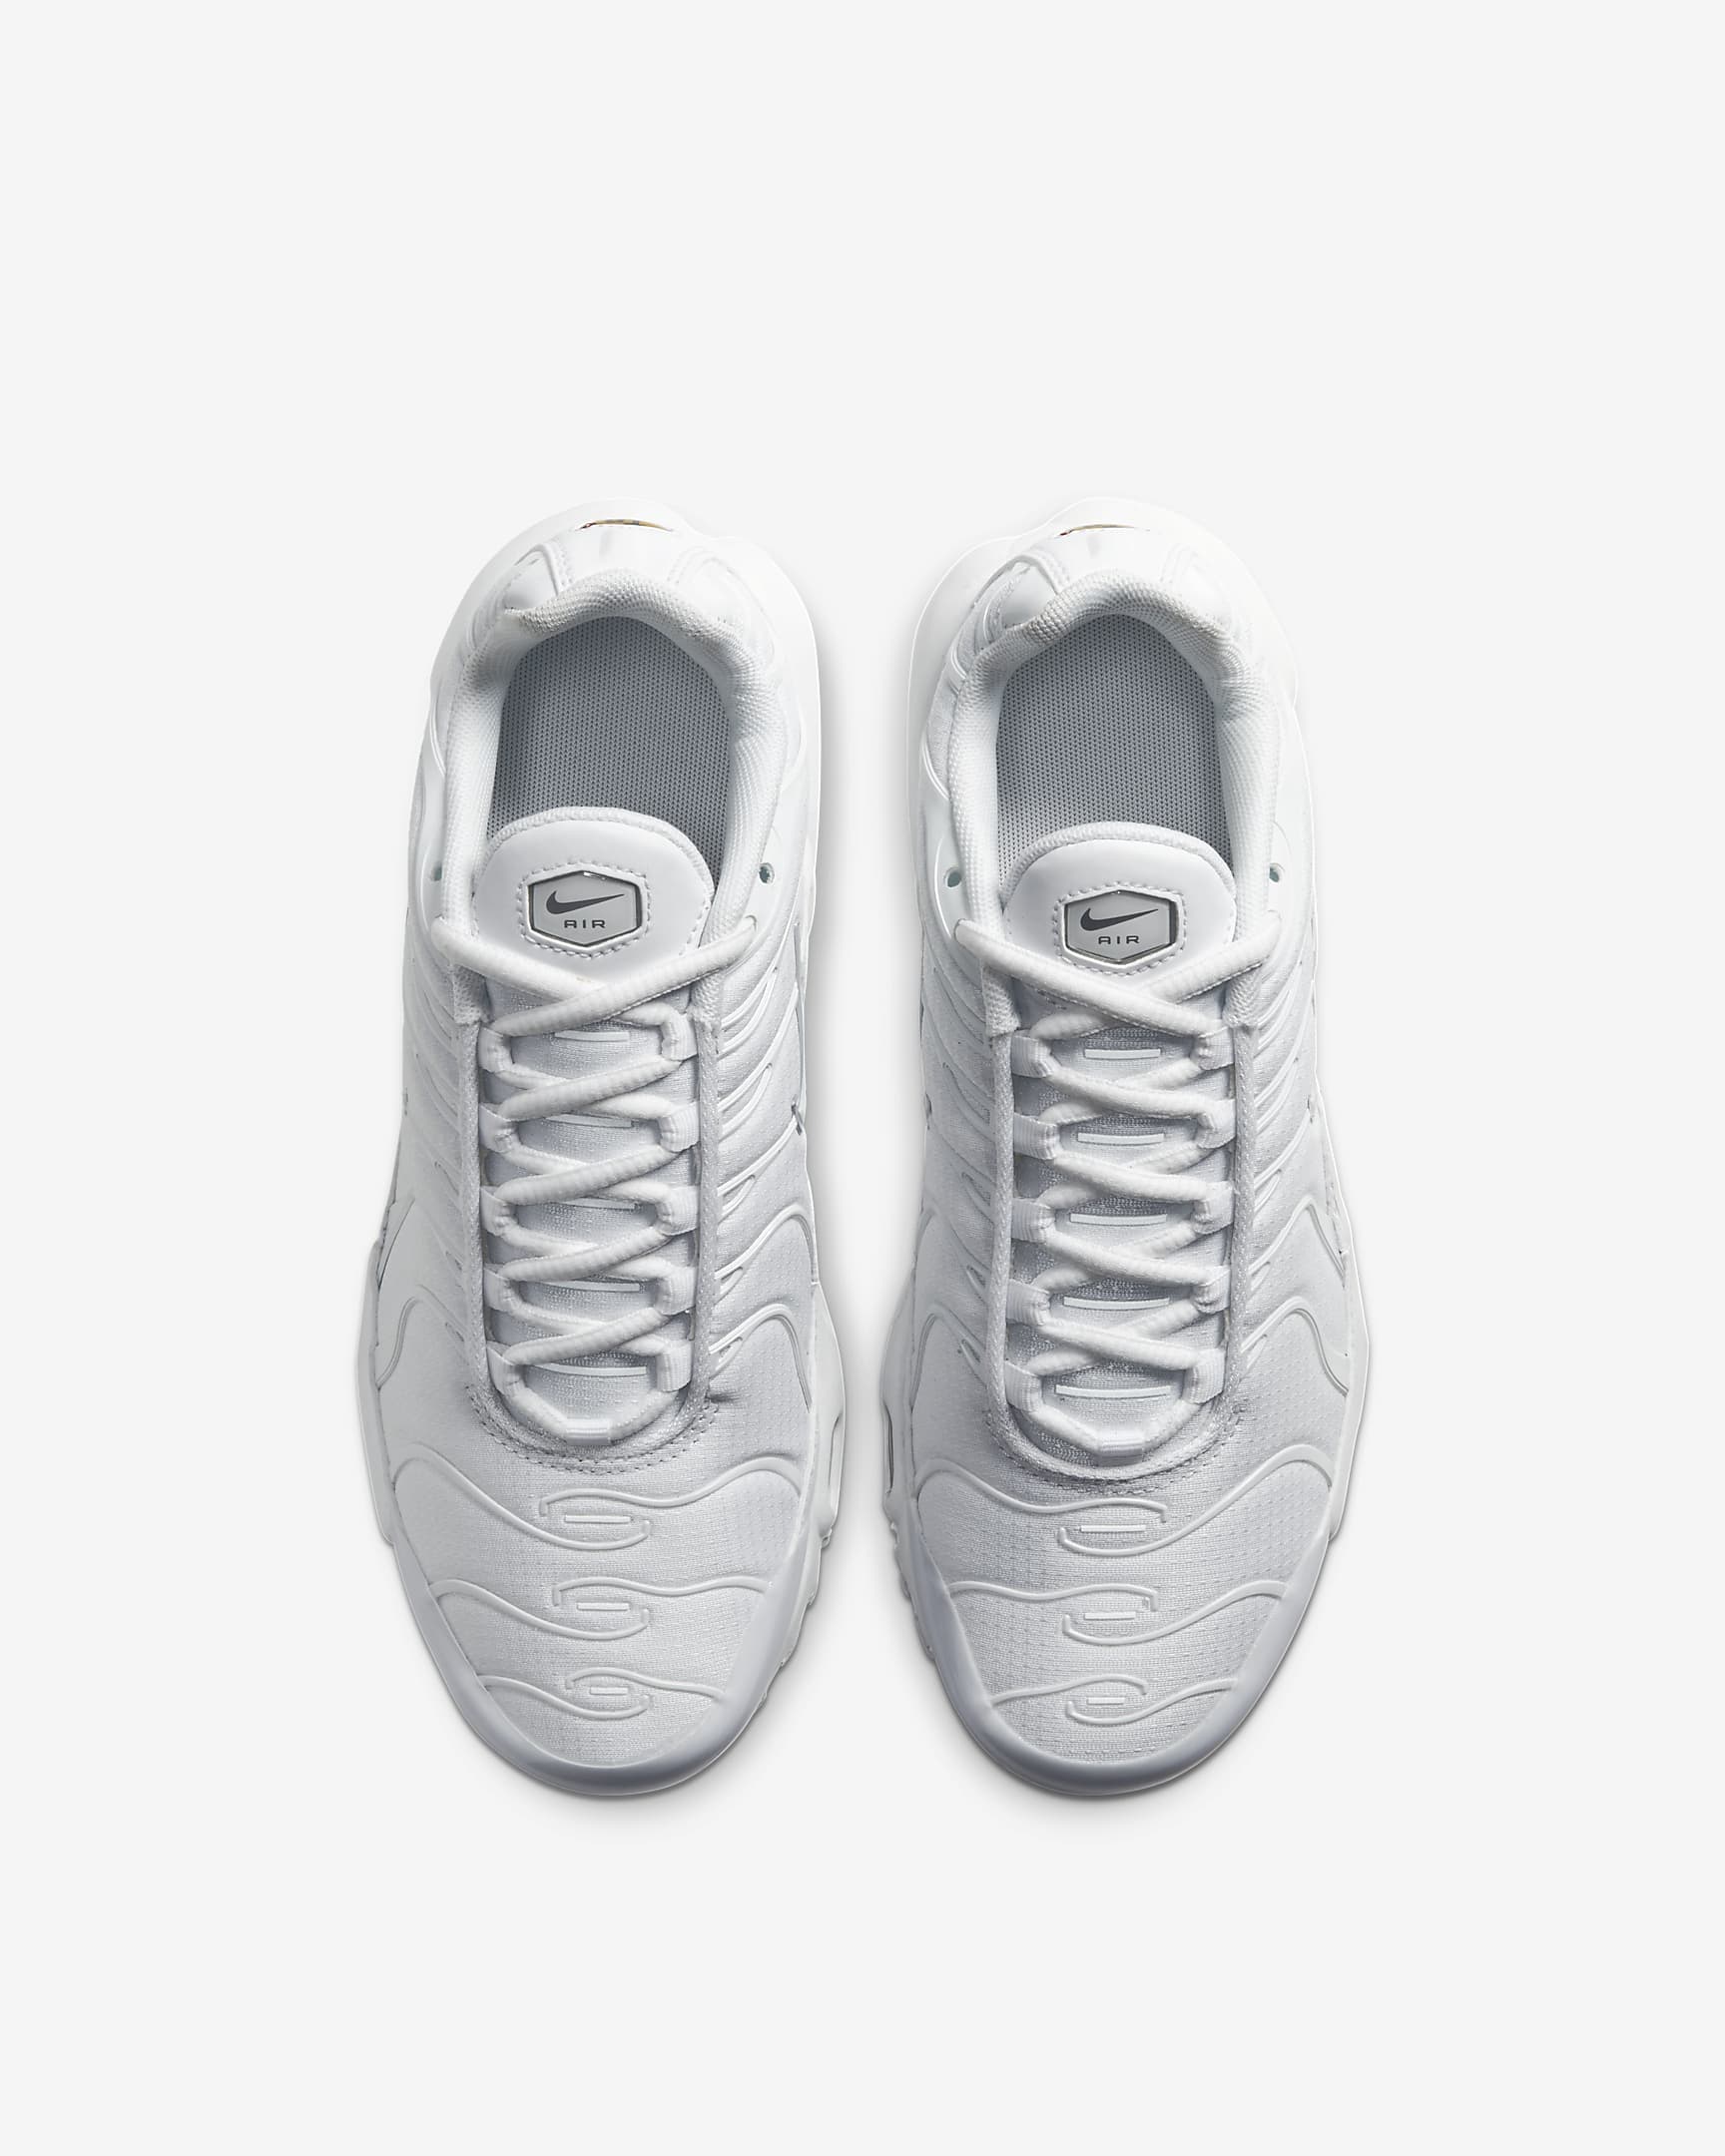 Nike Air Max Plus Kinderschoen - Wit/Metallic Silver/Wit